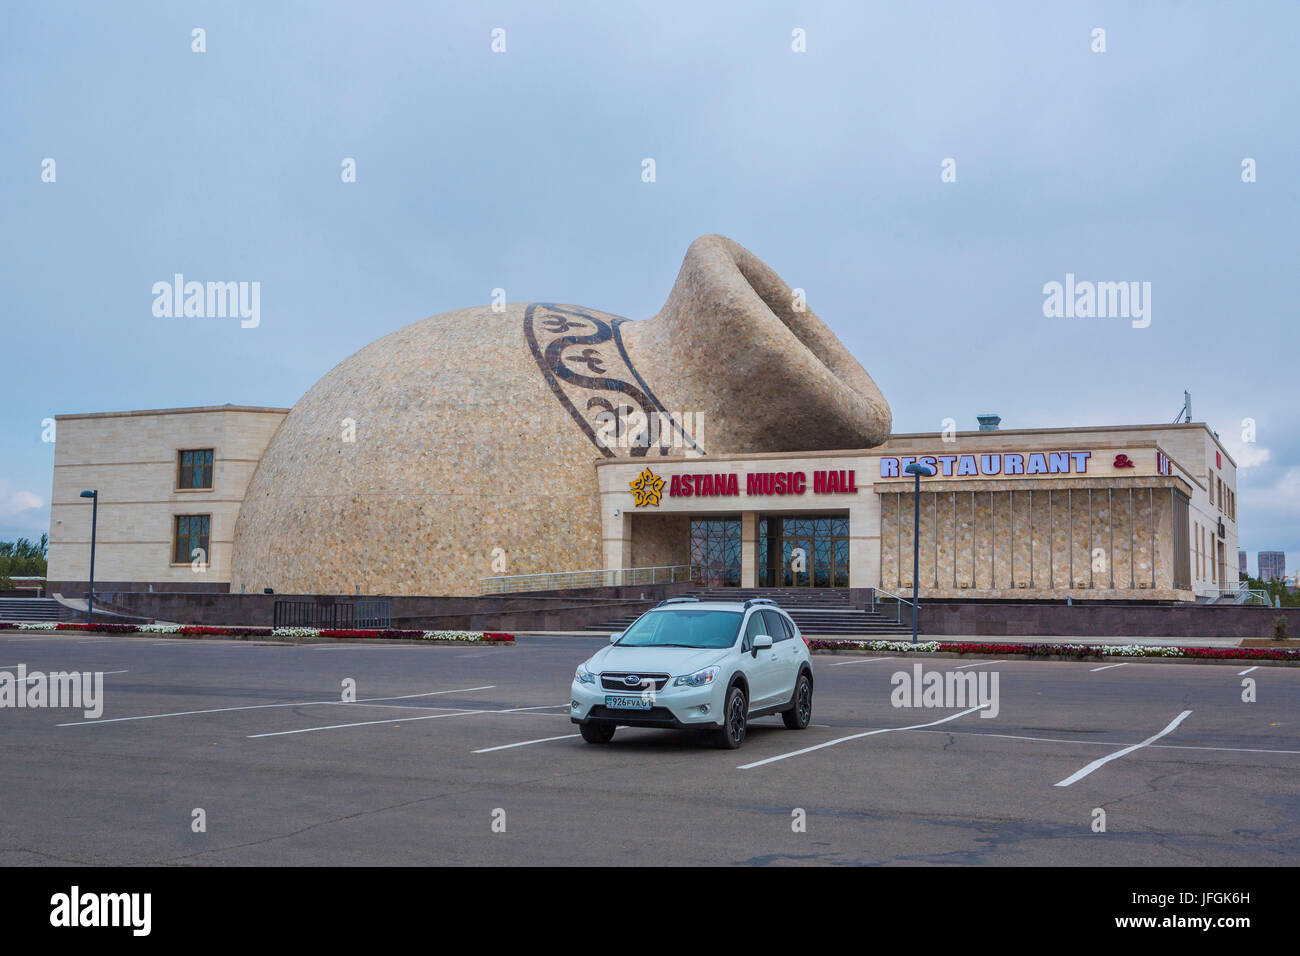 Kasachstan, Astana Stadt neue Administrative Stadt, Restaurant Stockfoto